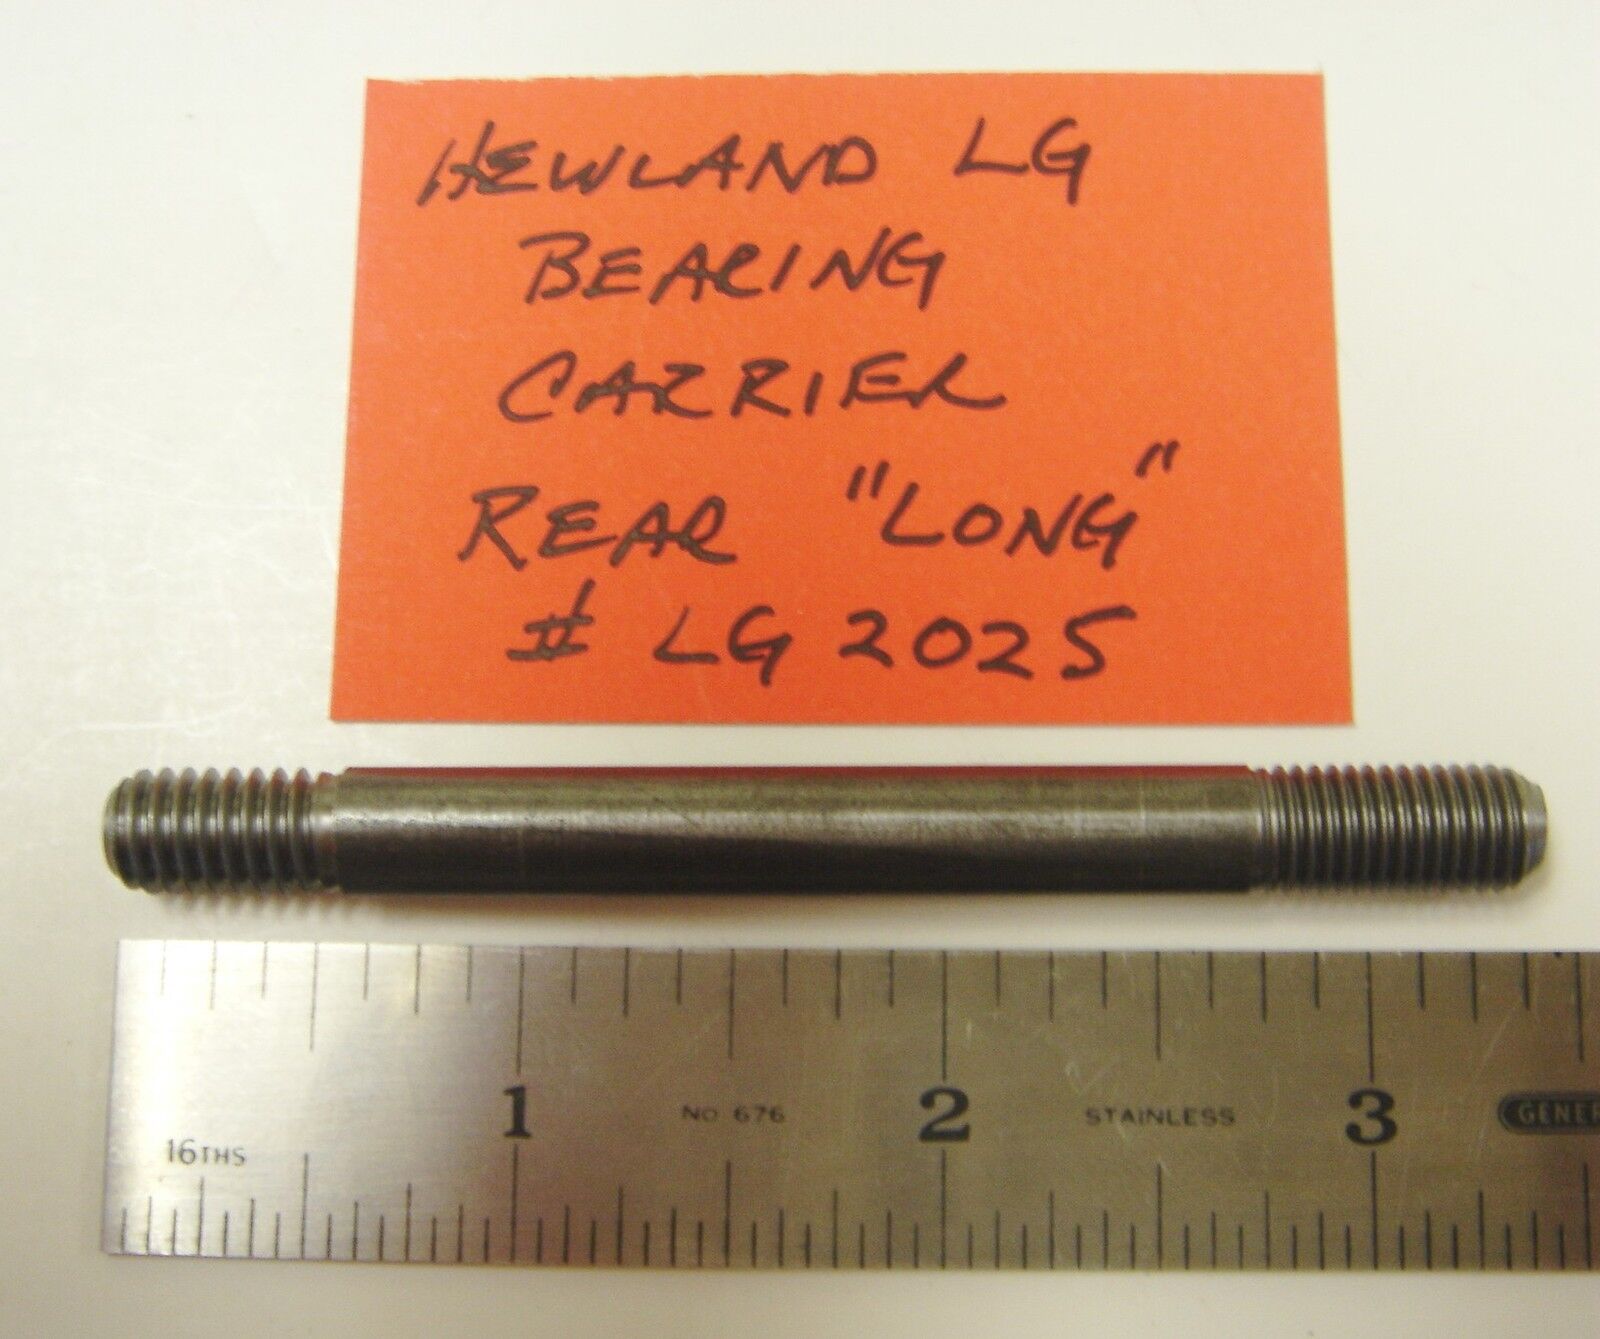 Hewland LG Transaxle Bearing Carrier Rear Studs  \